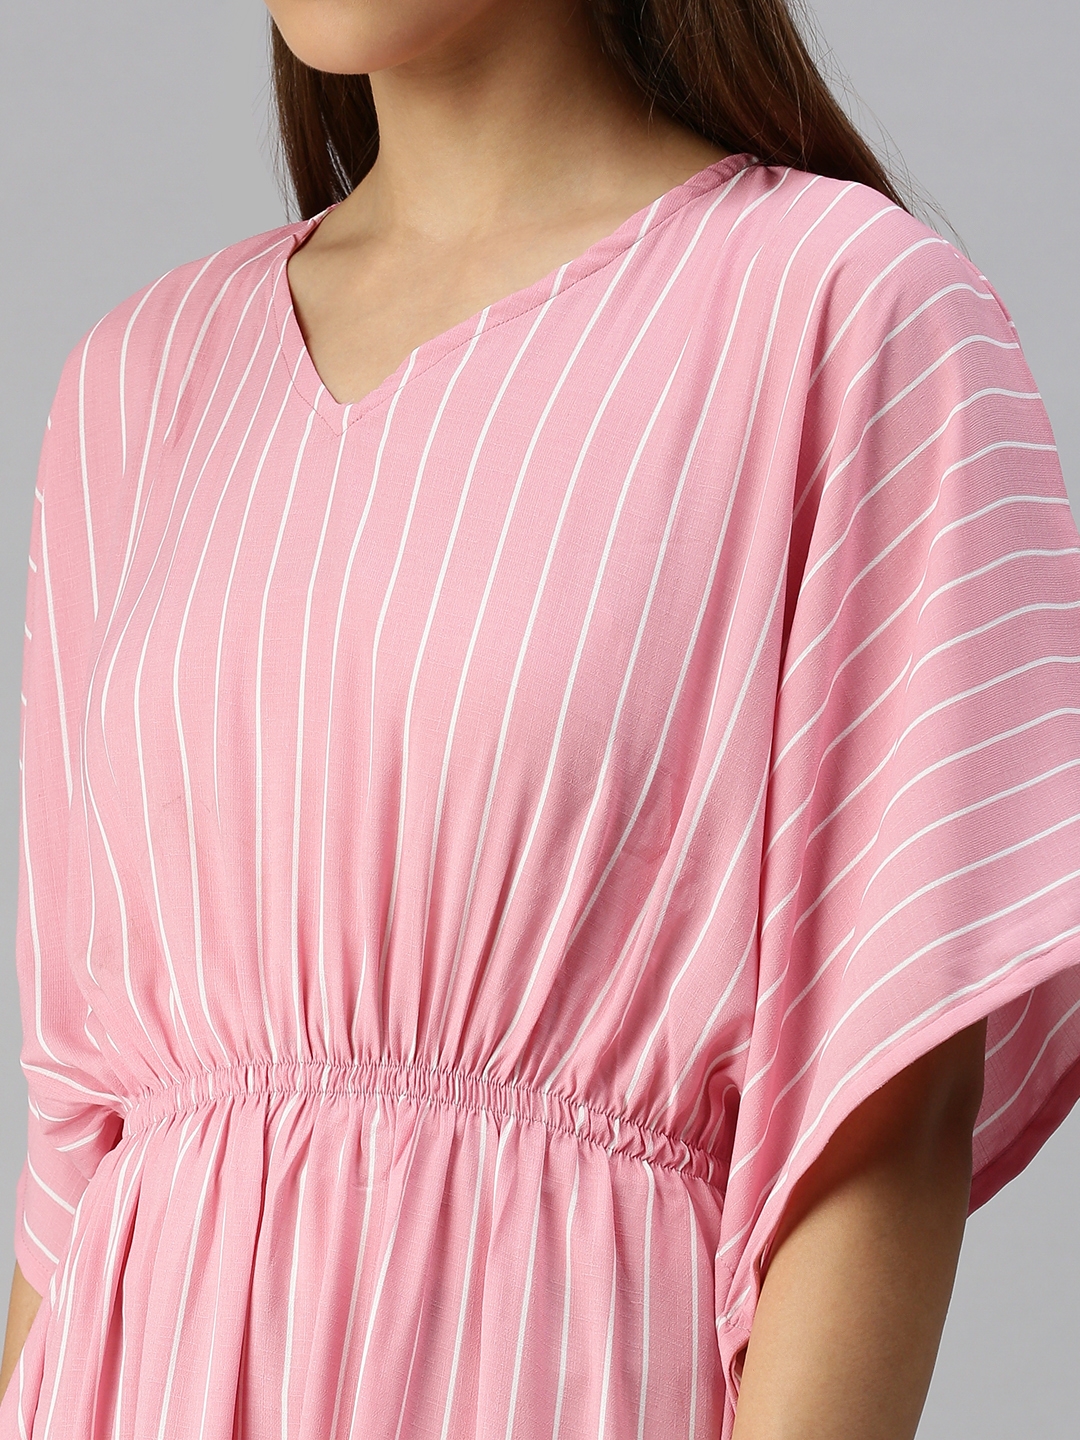 Women's Pink Striped Dress